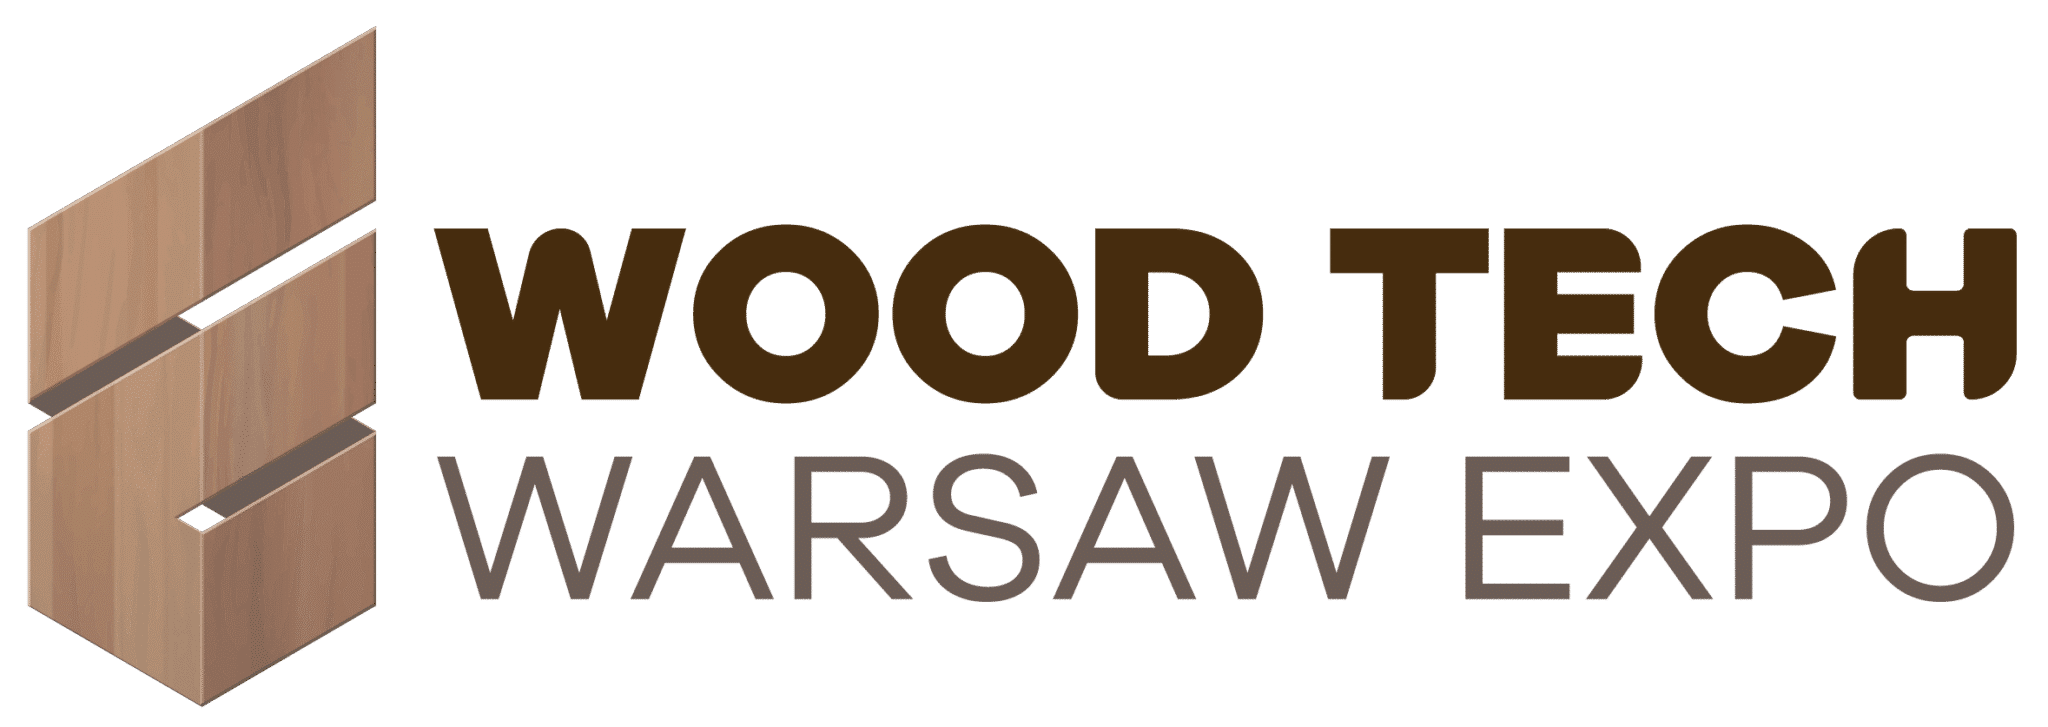 wood_logo